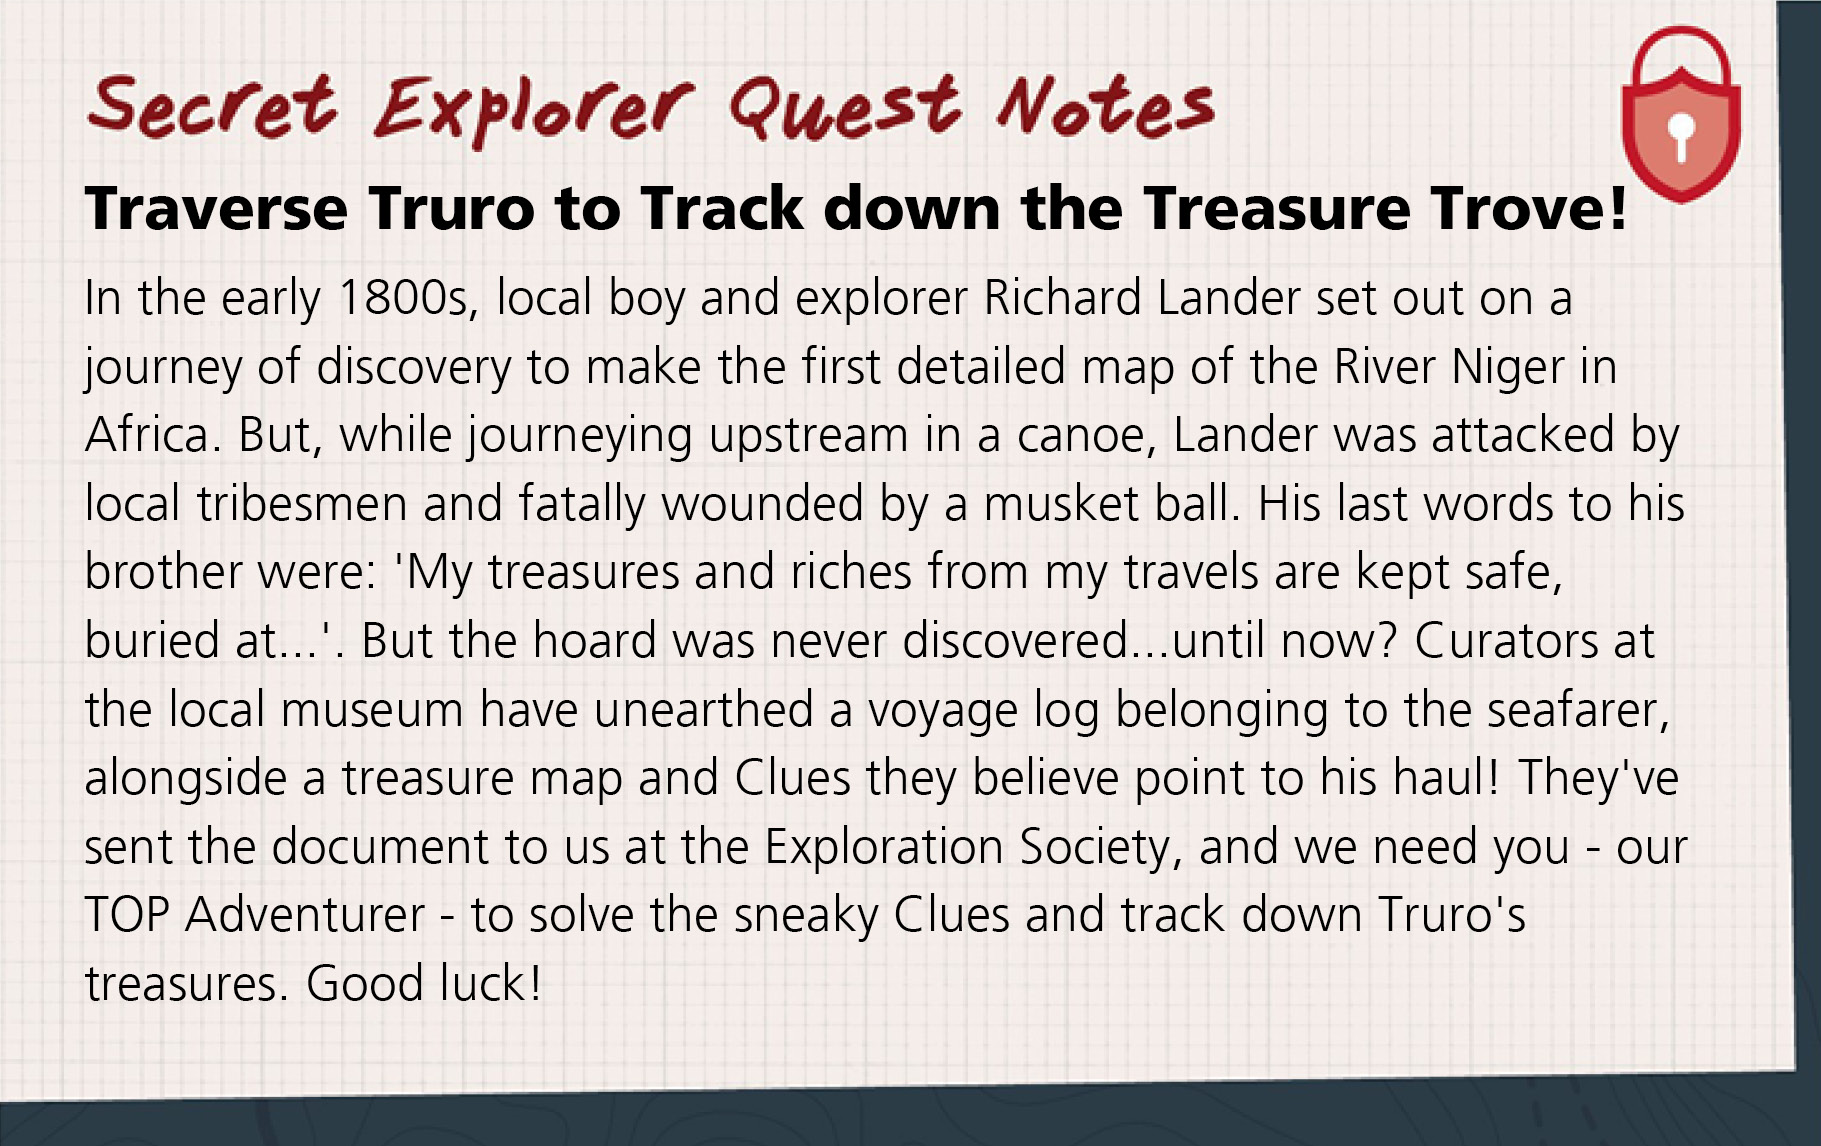 The Truro treasure hunt backstory